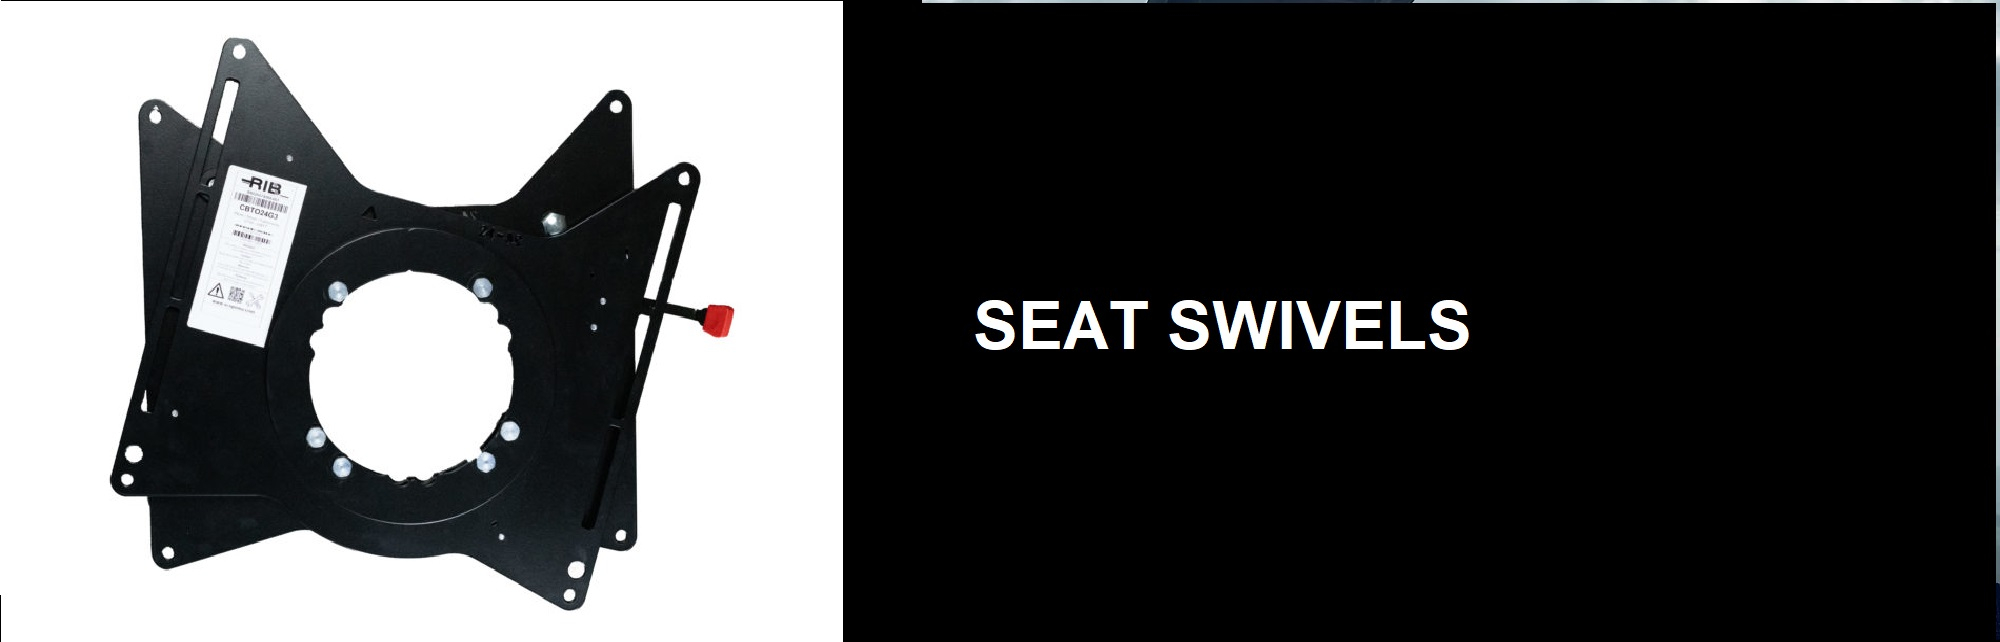 Seat Swivels